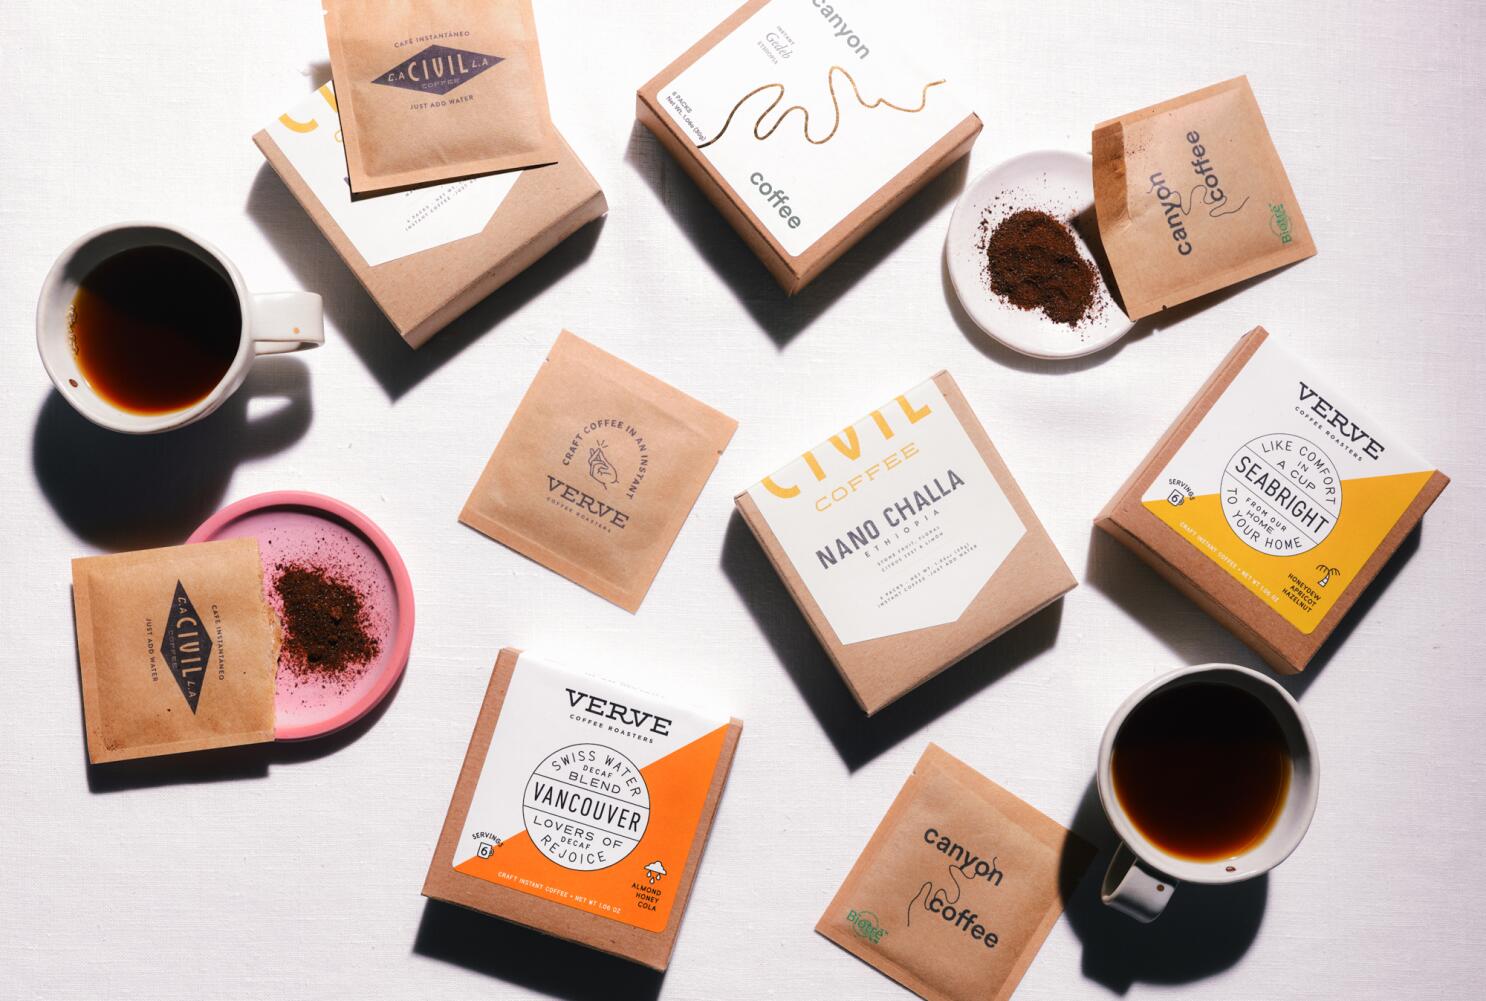 Coffee Design: Counter Culture Coffee Single-Serve Coffee Bags